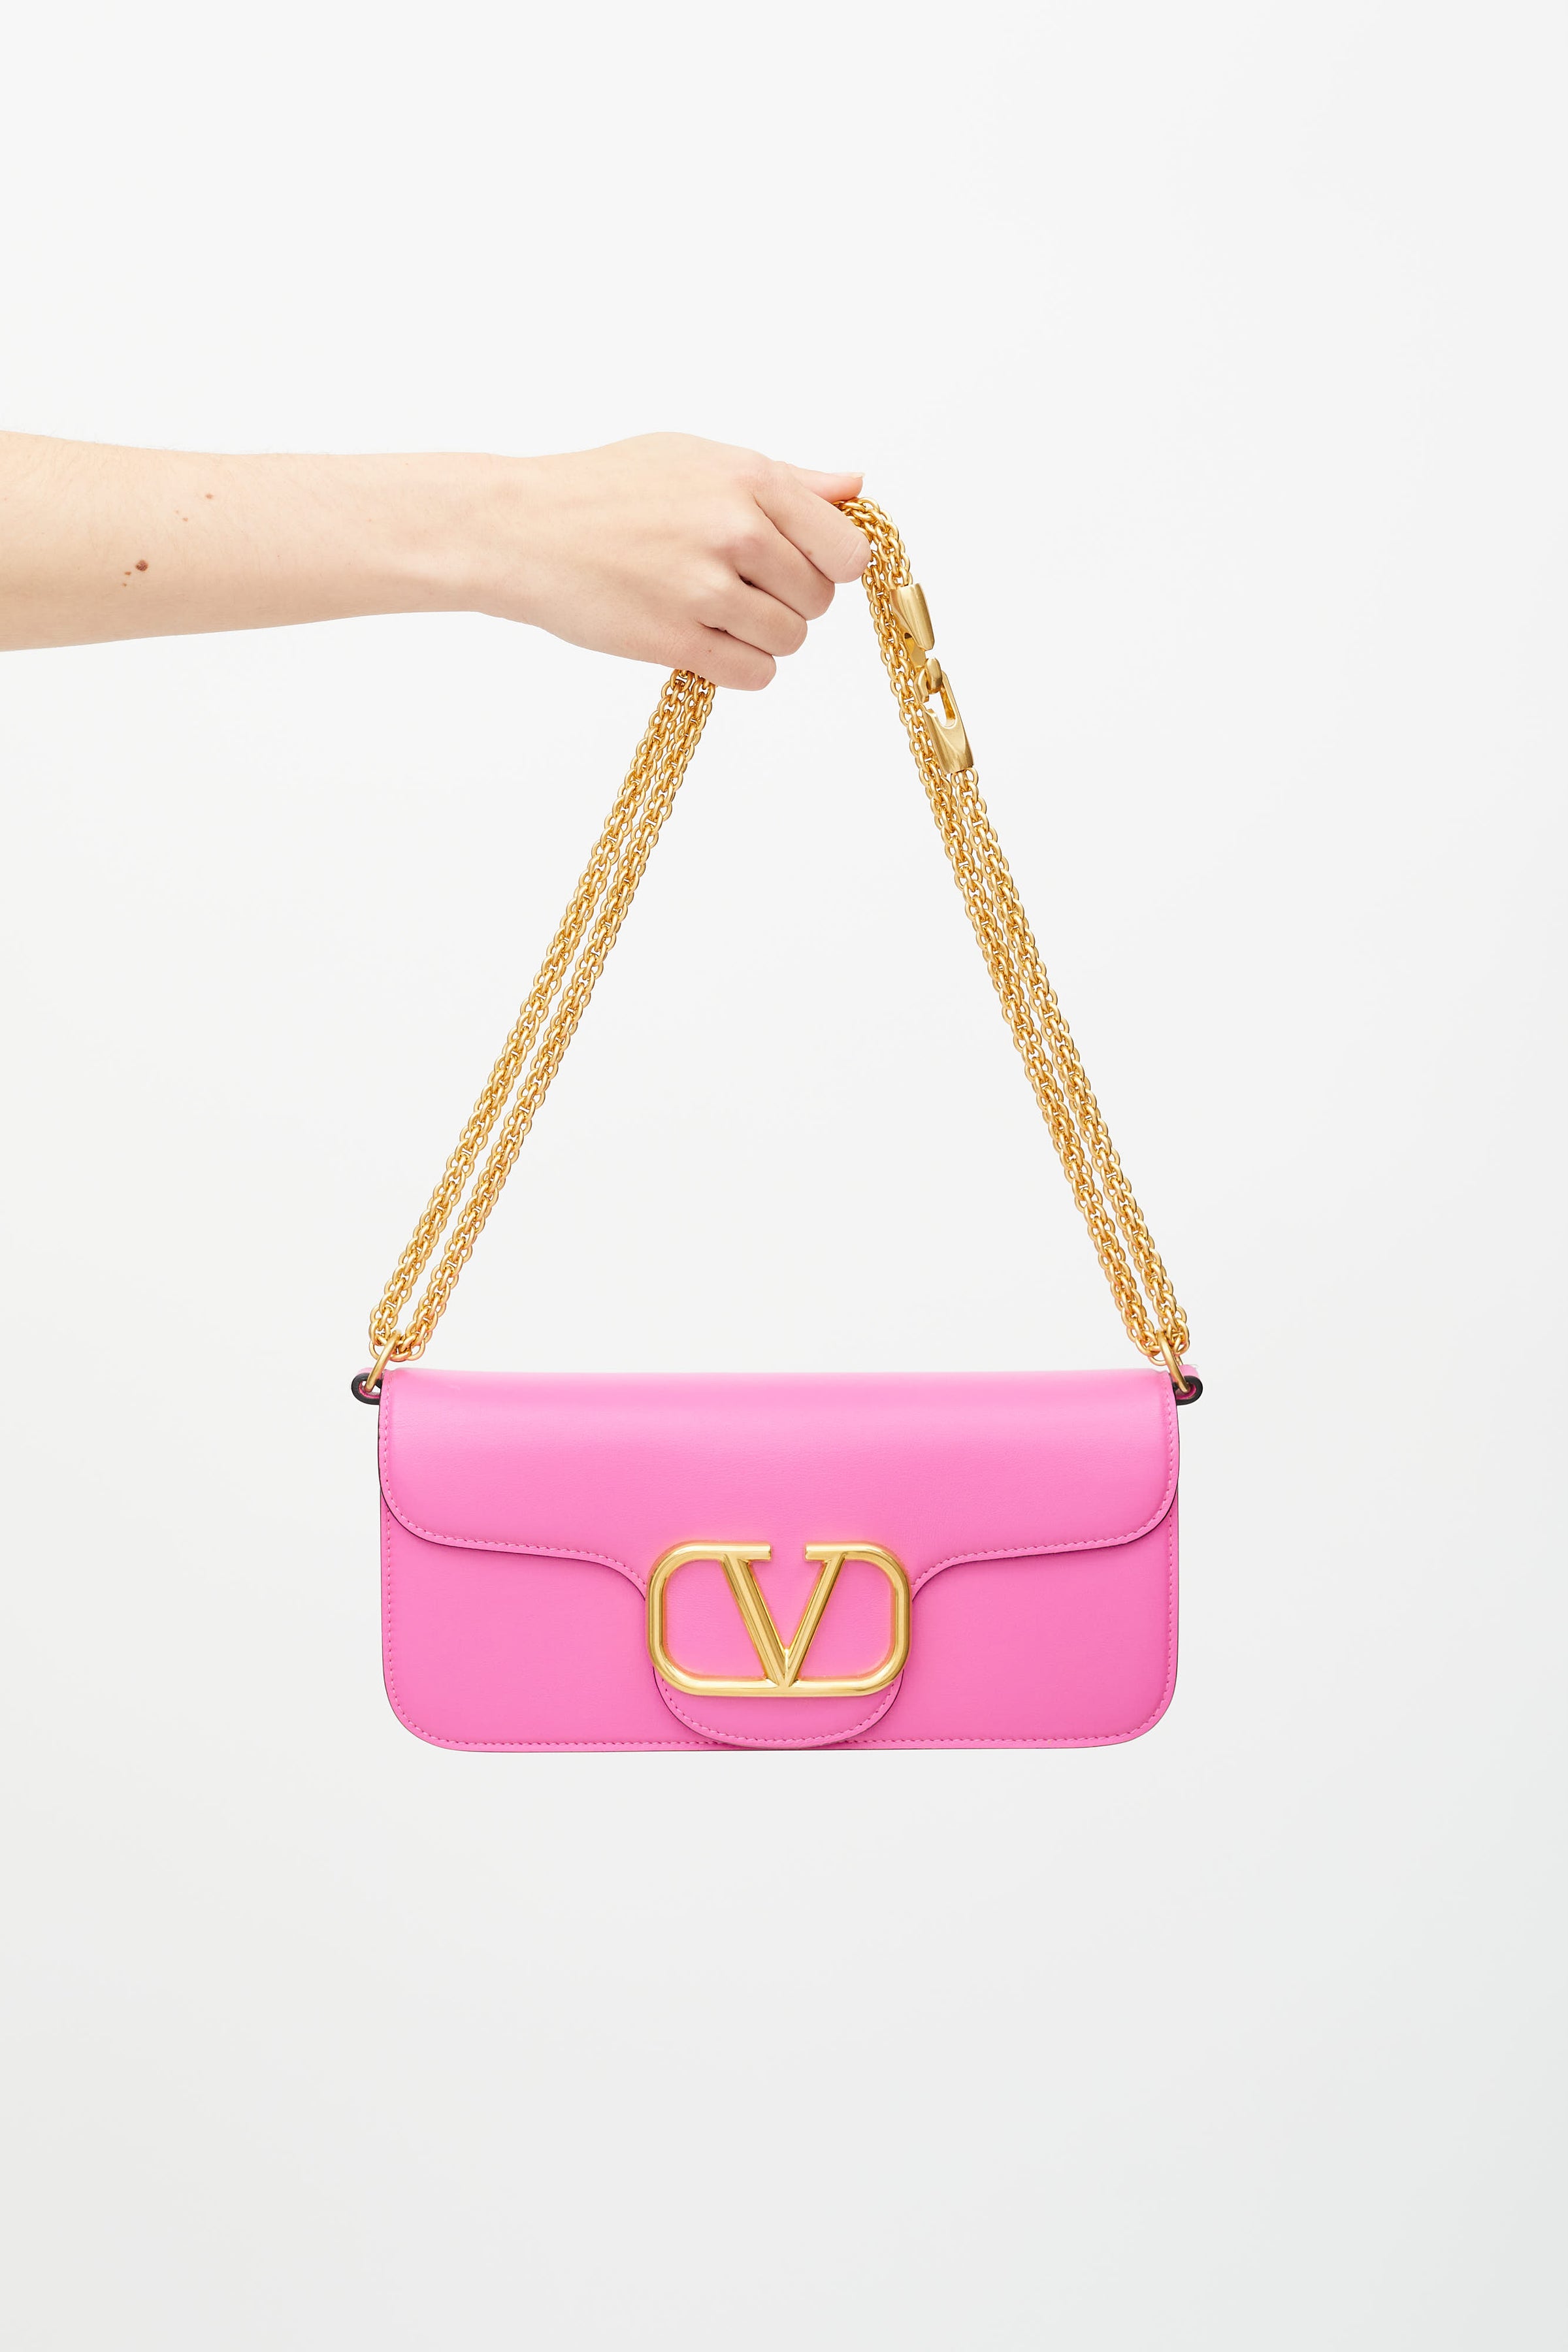 VALENTINO GARAVANI: Locò bag in smooth leather - Pink  Valentino Garavani  shoulder bag 2W0B0K30IYS online at